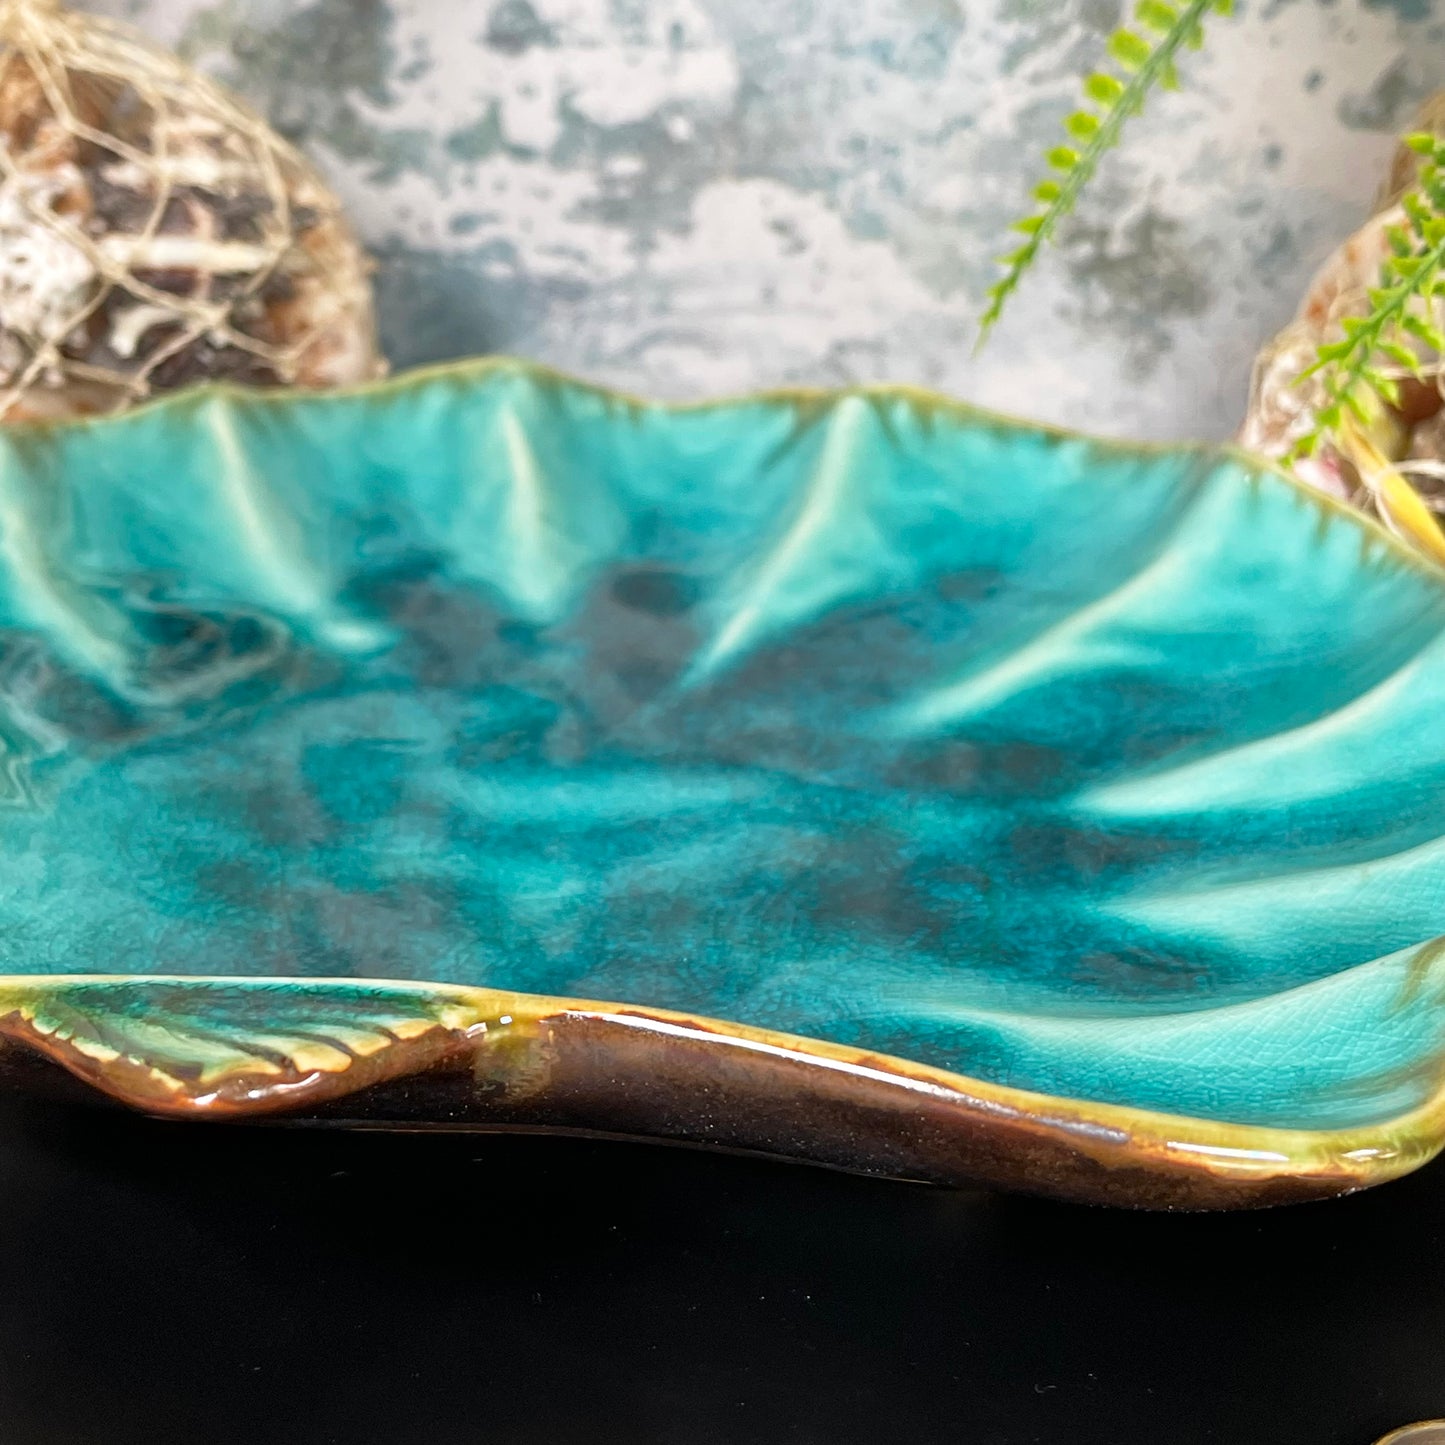 Ceramic Teal Blue Scallop Shell Trinket Dish